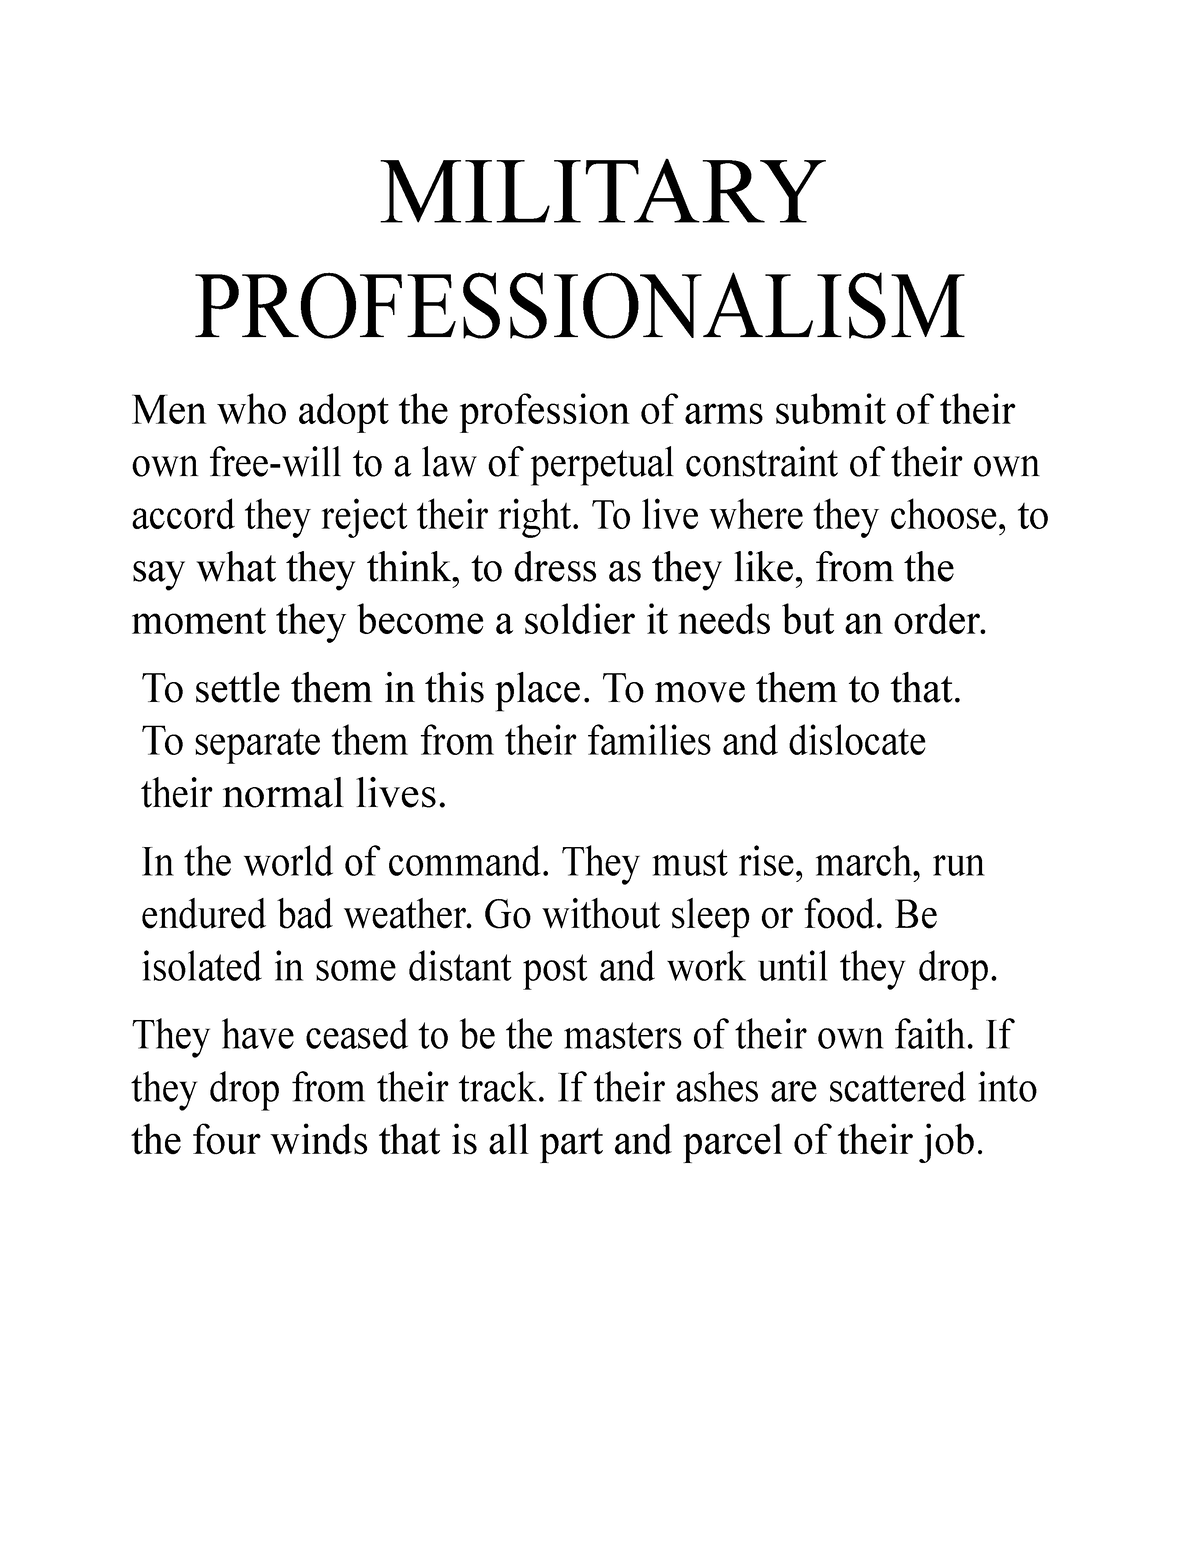 400 word essay on professionalism